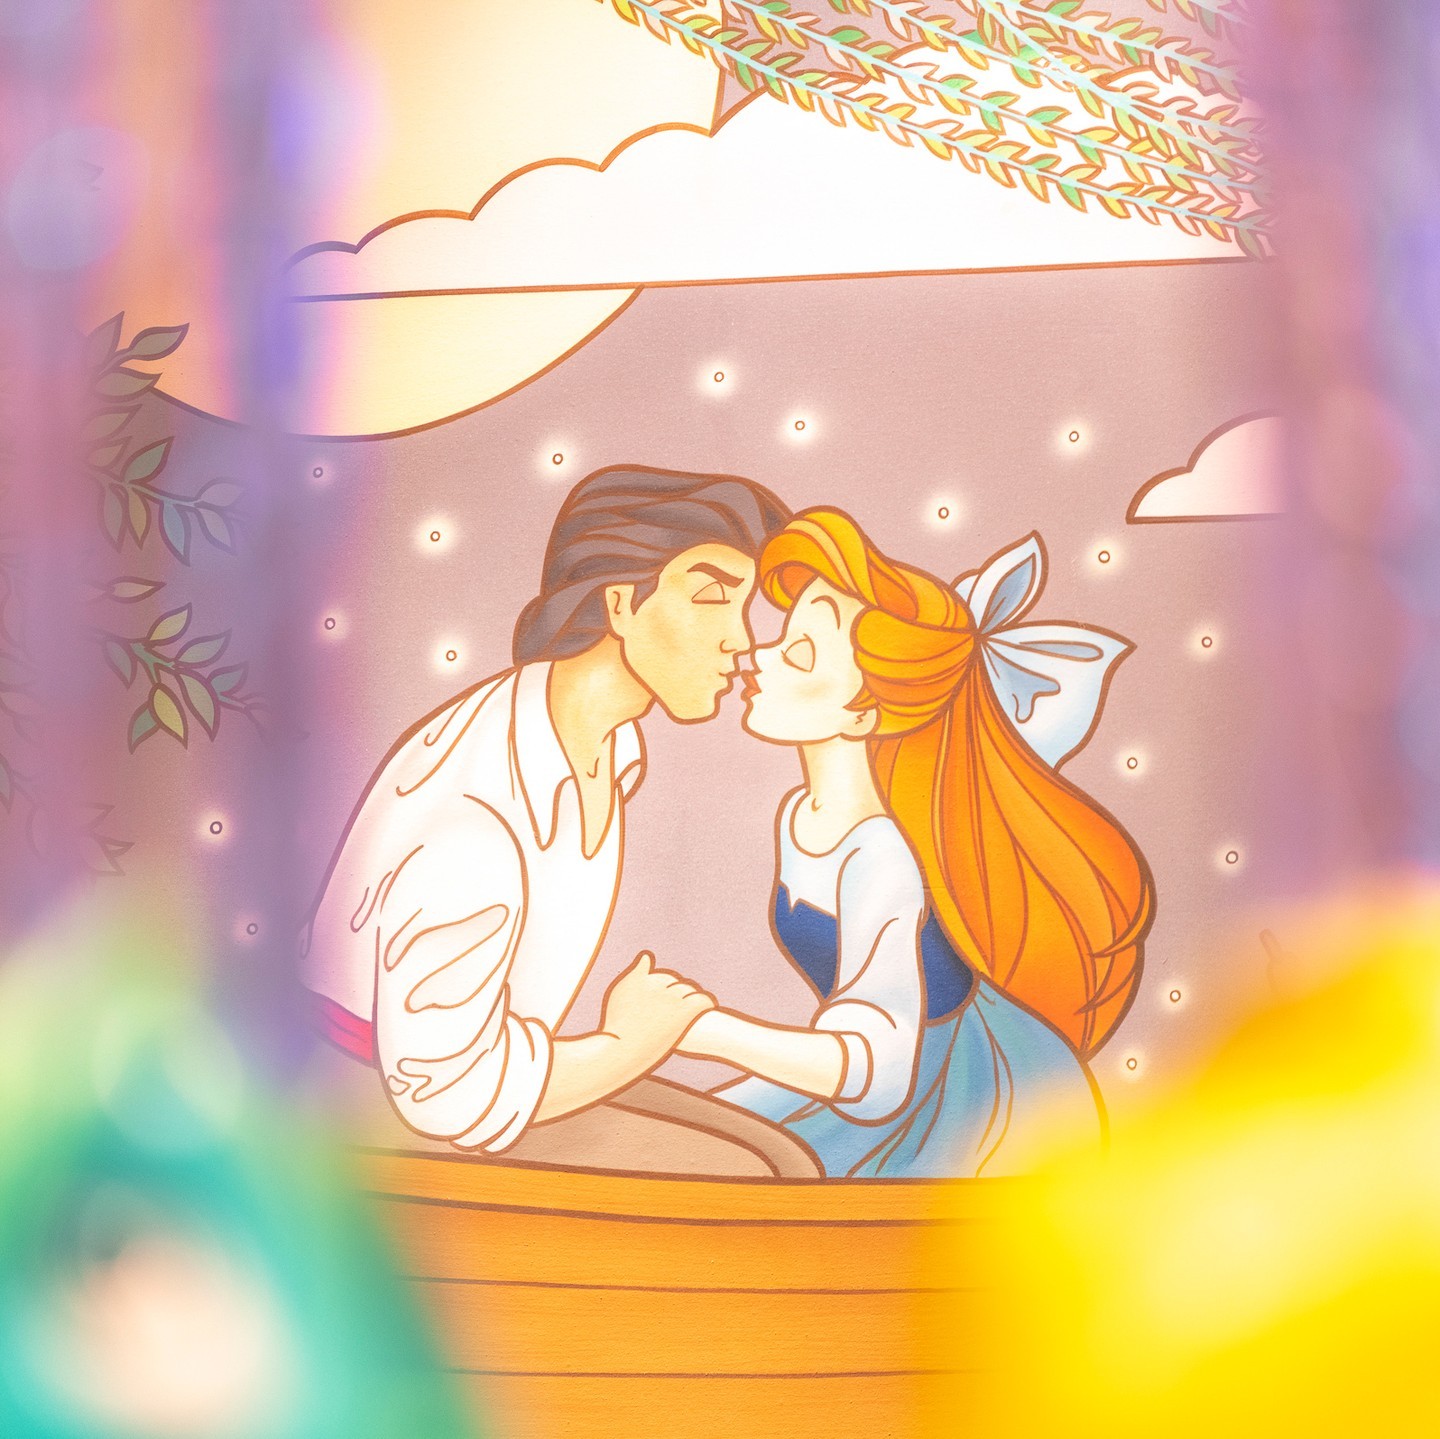 image of True romance♡
この幸せよ、永遠に
#ariel #princeeric #thelittlemermaid #kissdegirlfashions...